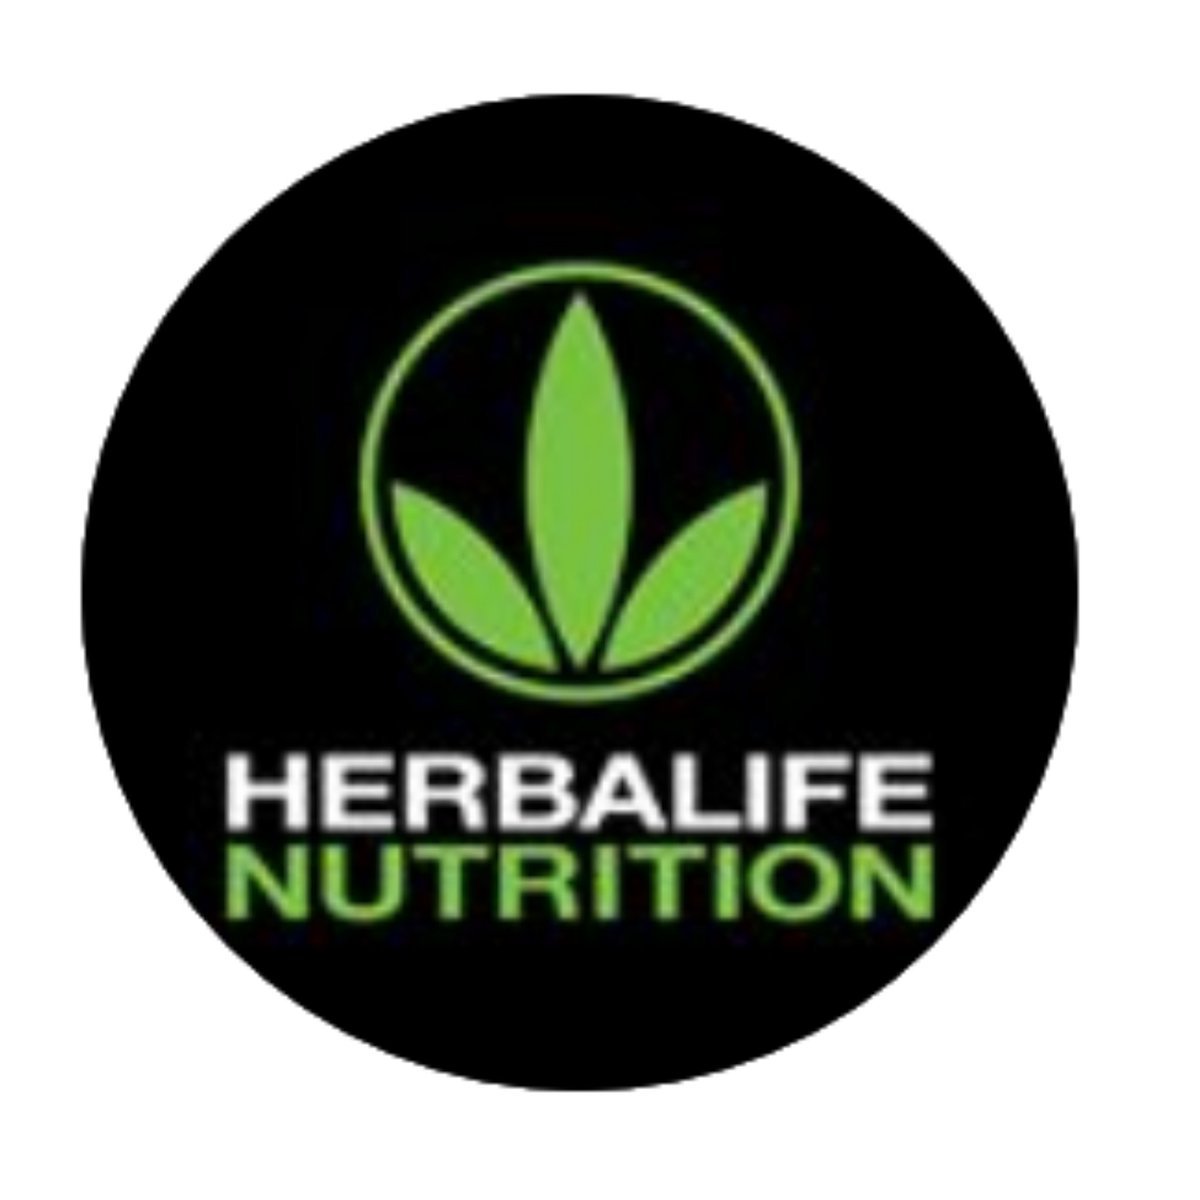 Гербалайф красноярск. Трилистник Гербалайф. Гербалайф Nutrition logo. Herbalife Nutrition логотип. Фирменный знак Гербалайф.